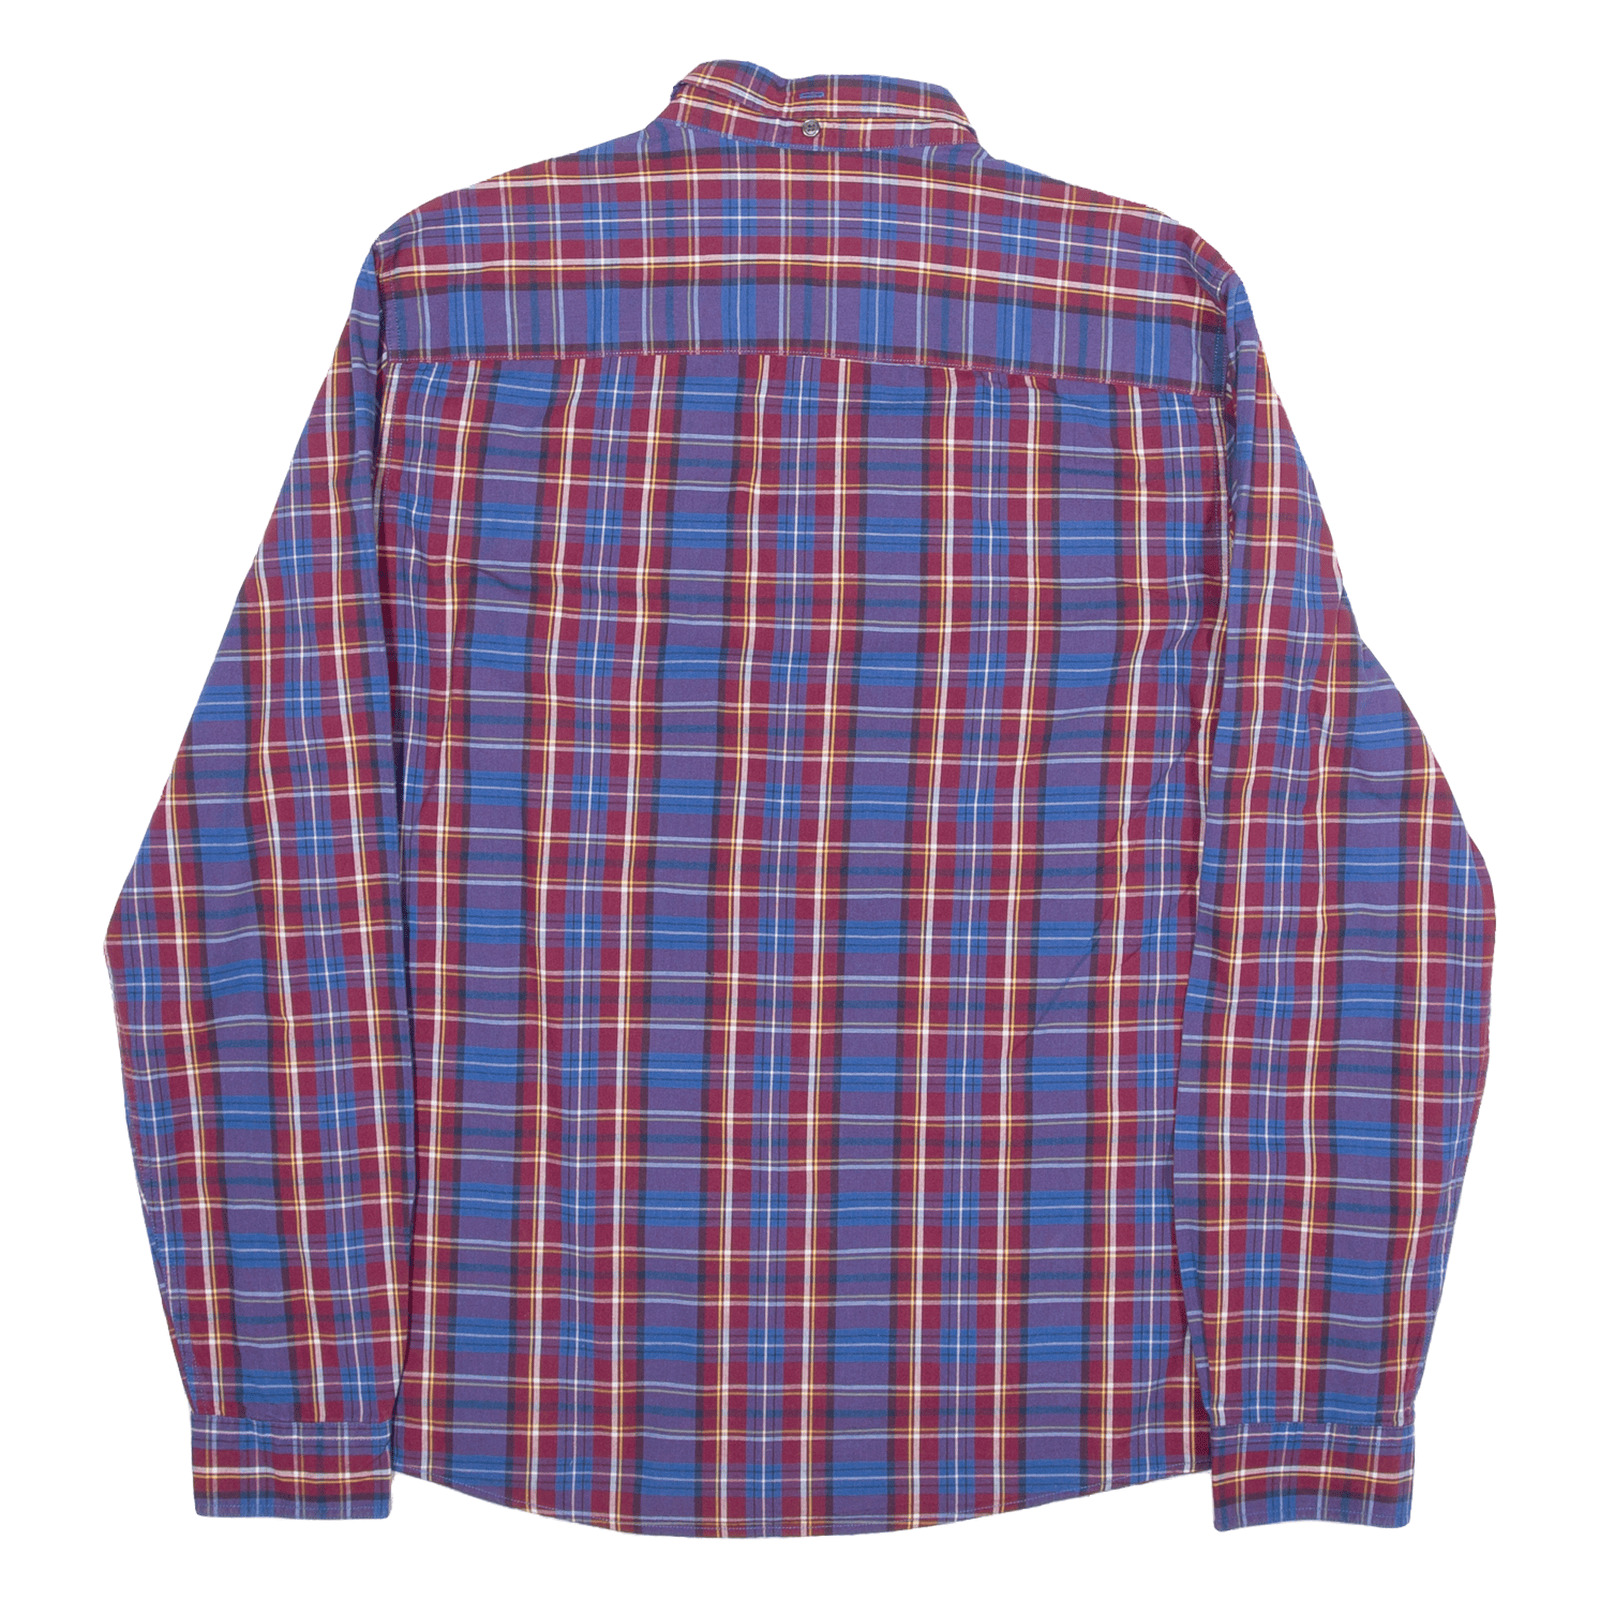 LYLE & SCOTT Shirt Purple Check Long Sleeve Mens M - Picture 3 of 6